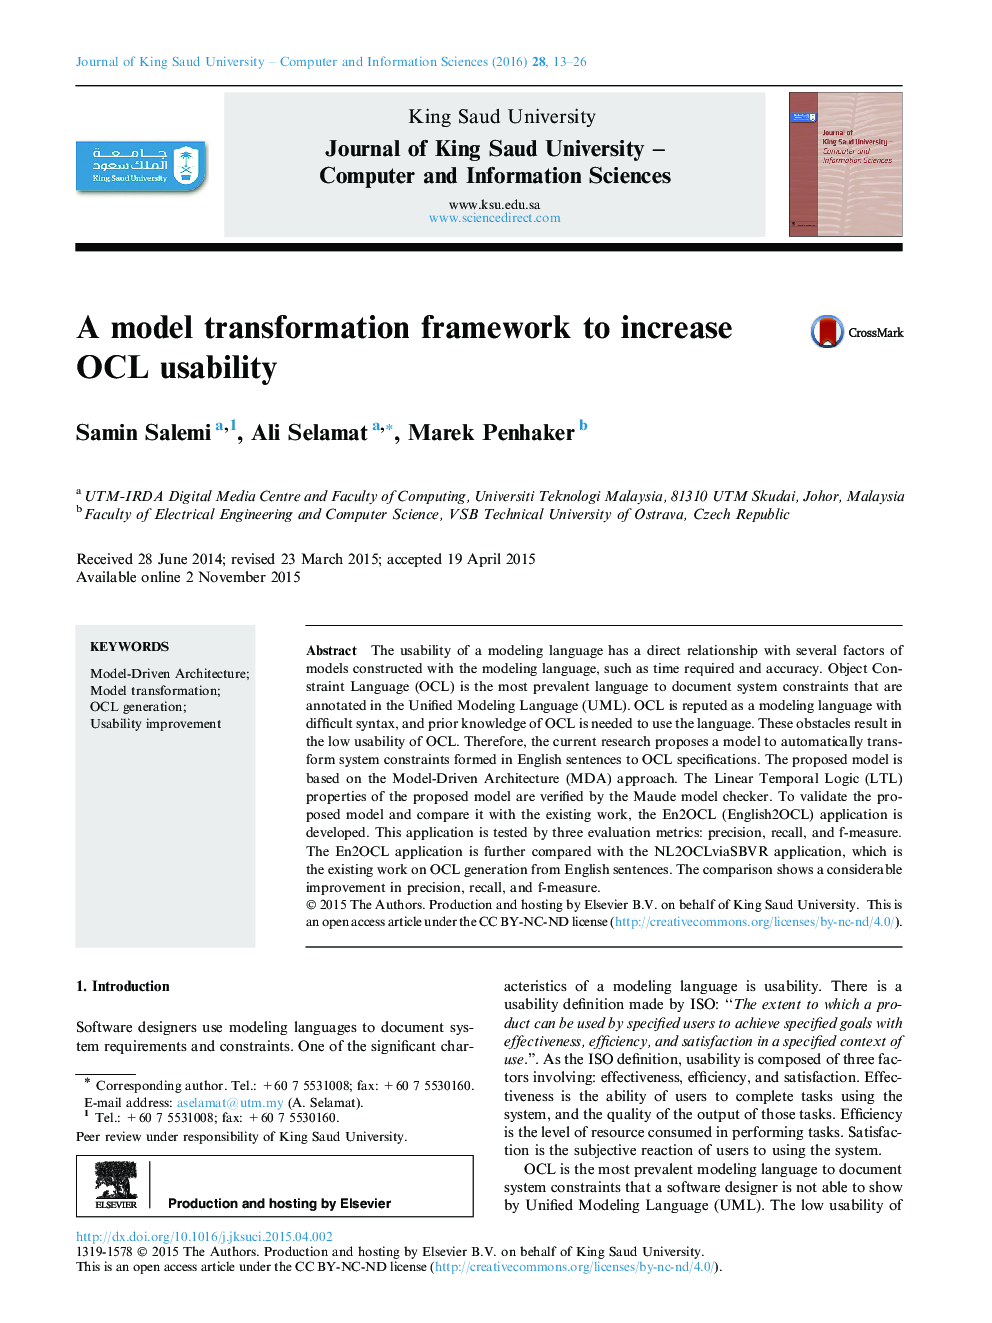 A model transformation framework to increase OCL usability 